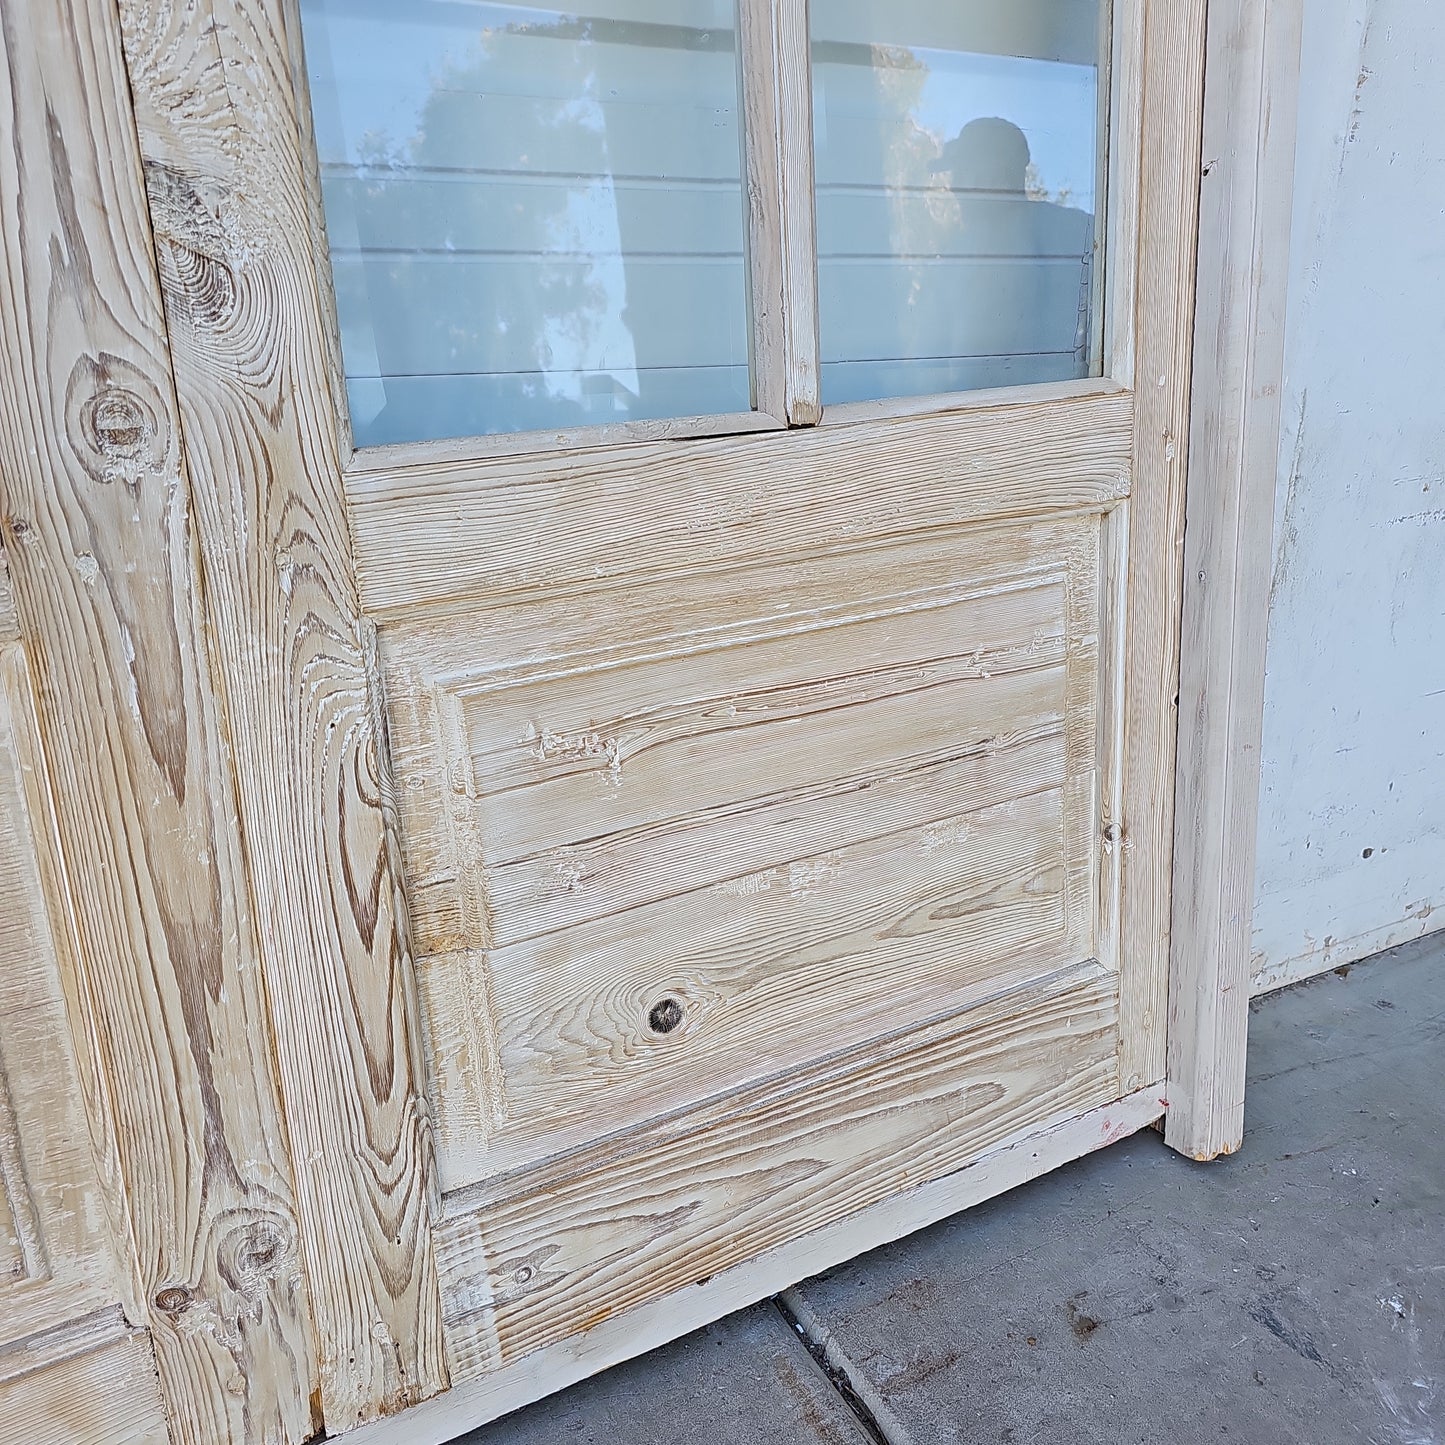 Set of 4 Wood Arched Doors w/32 Lites